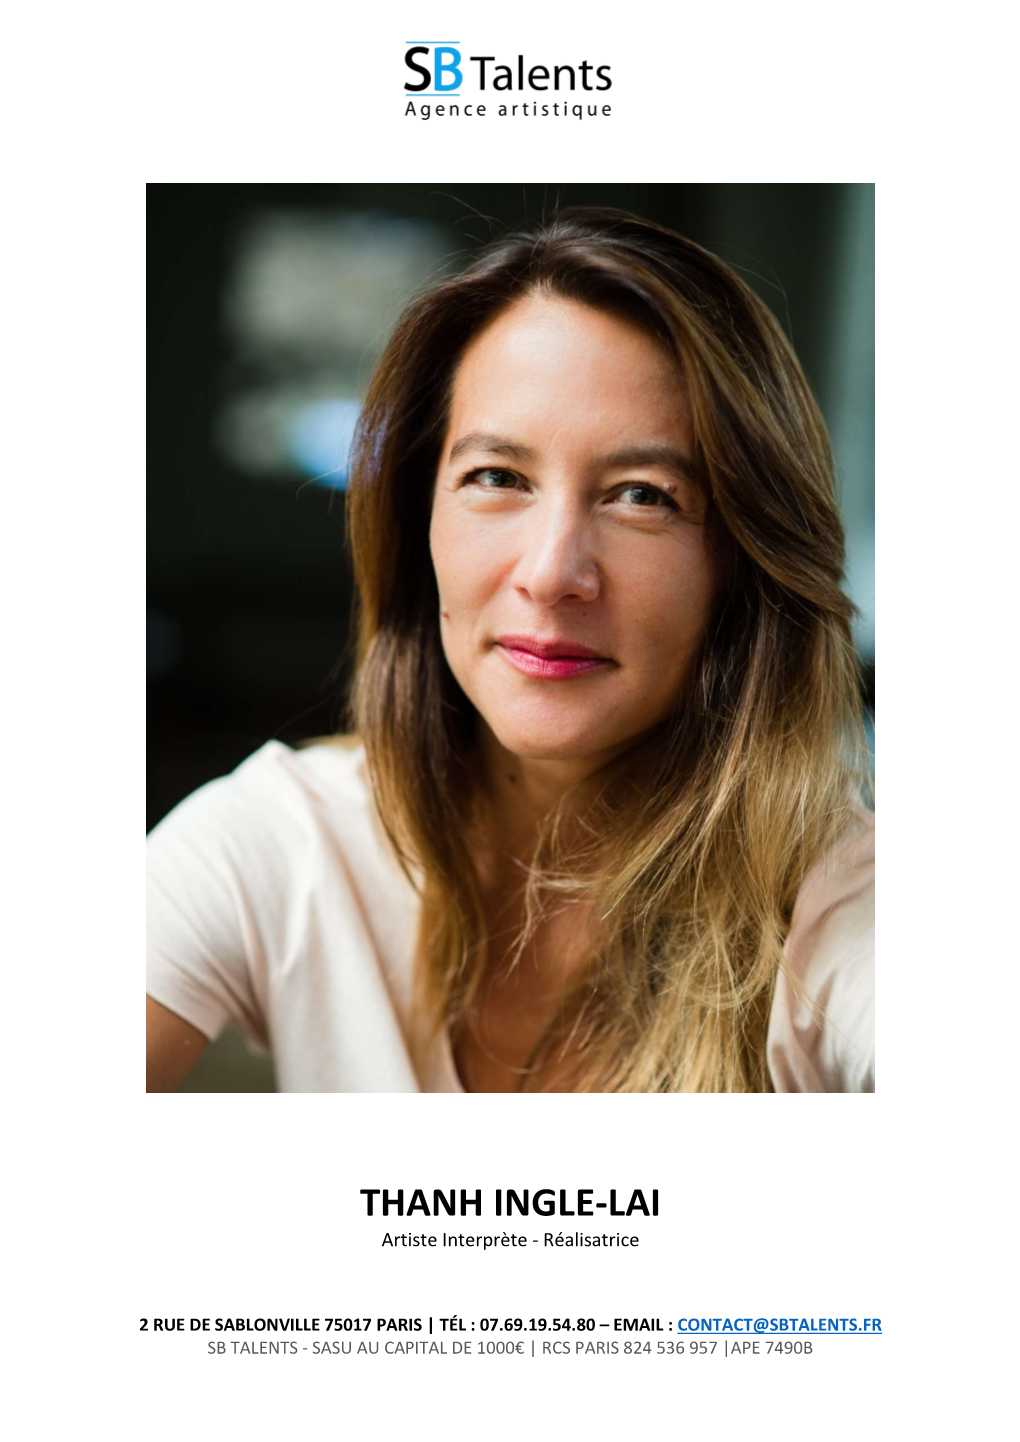 THANH INGLE-LAI Artiste Interprète - Réalisatrice